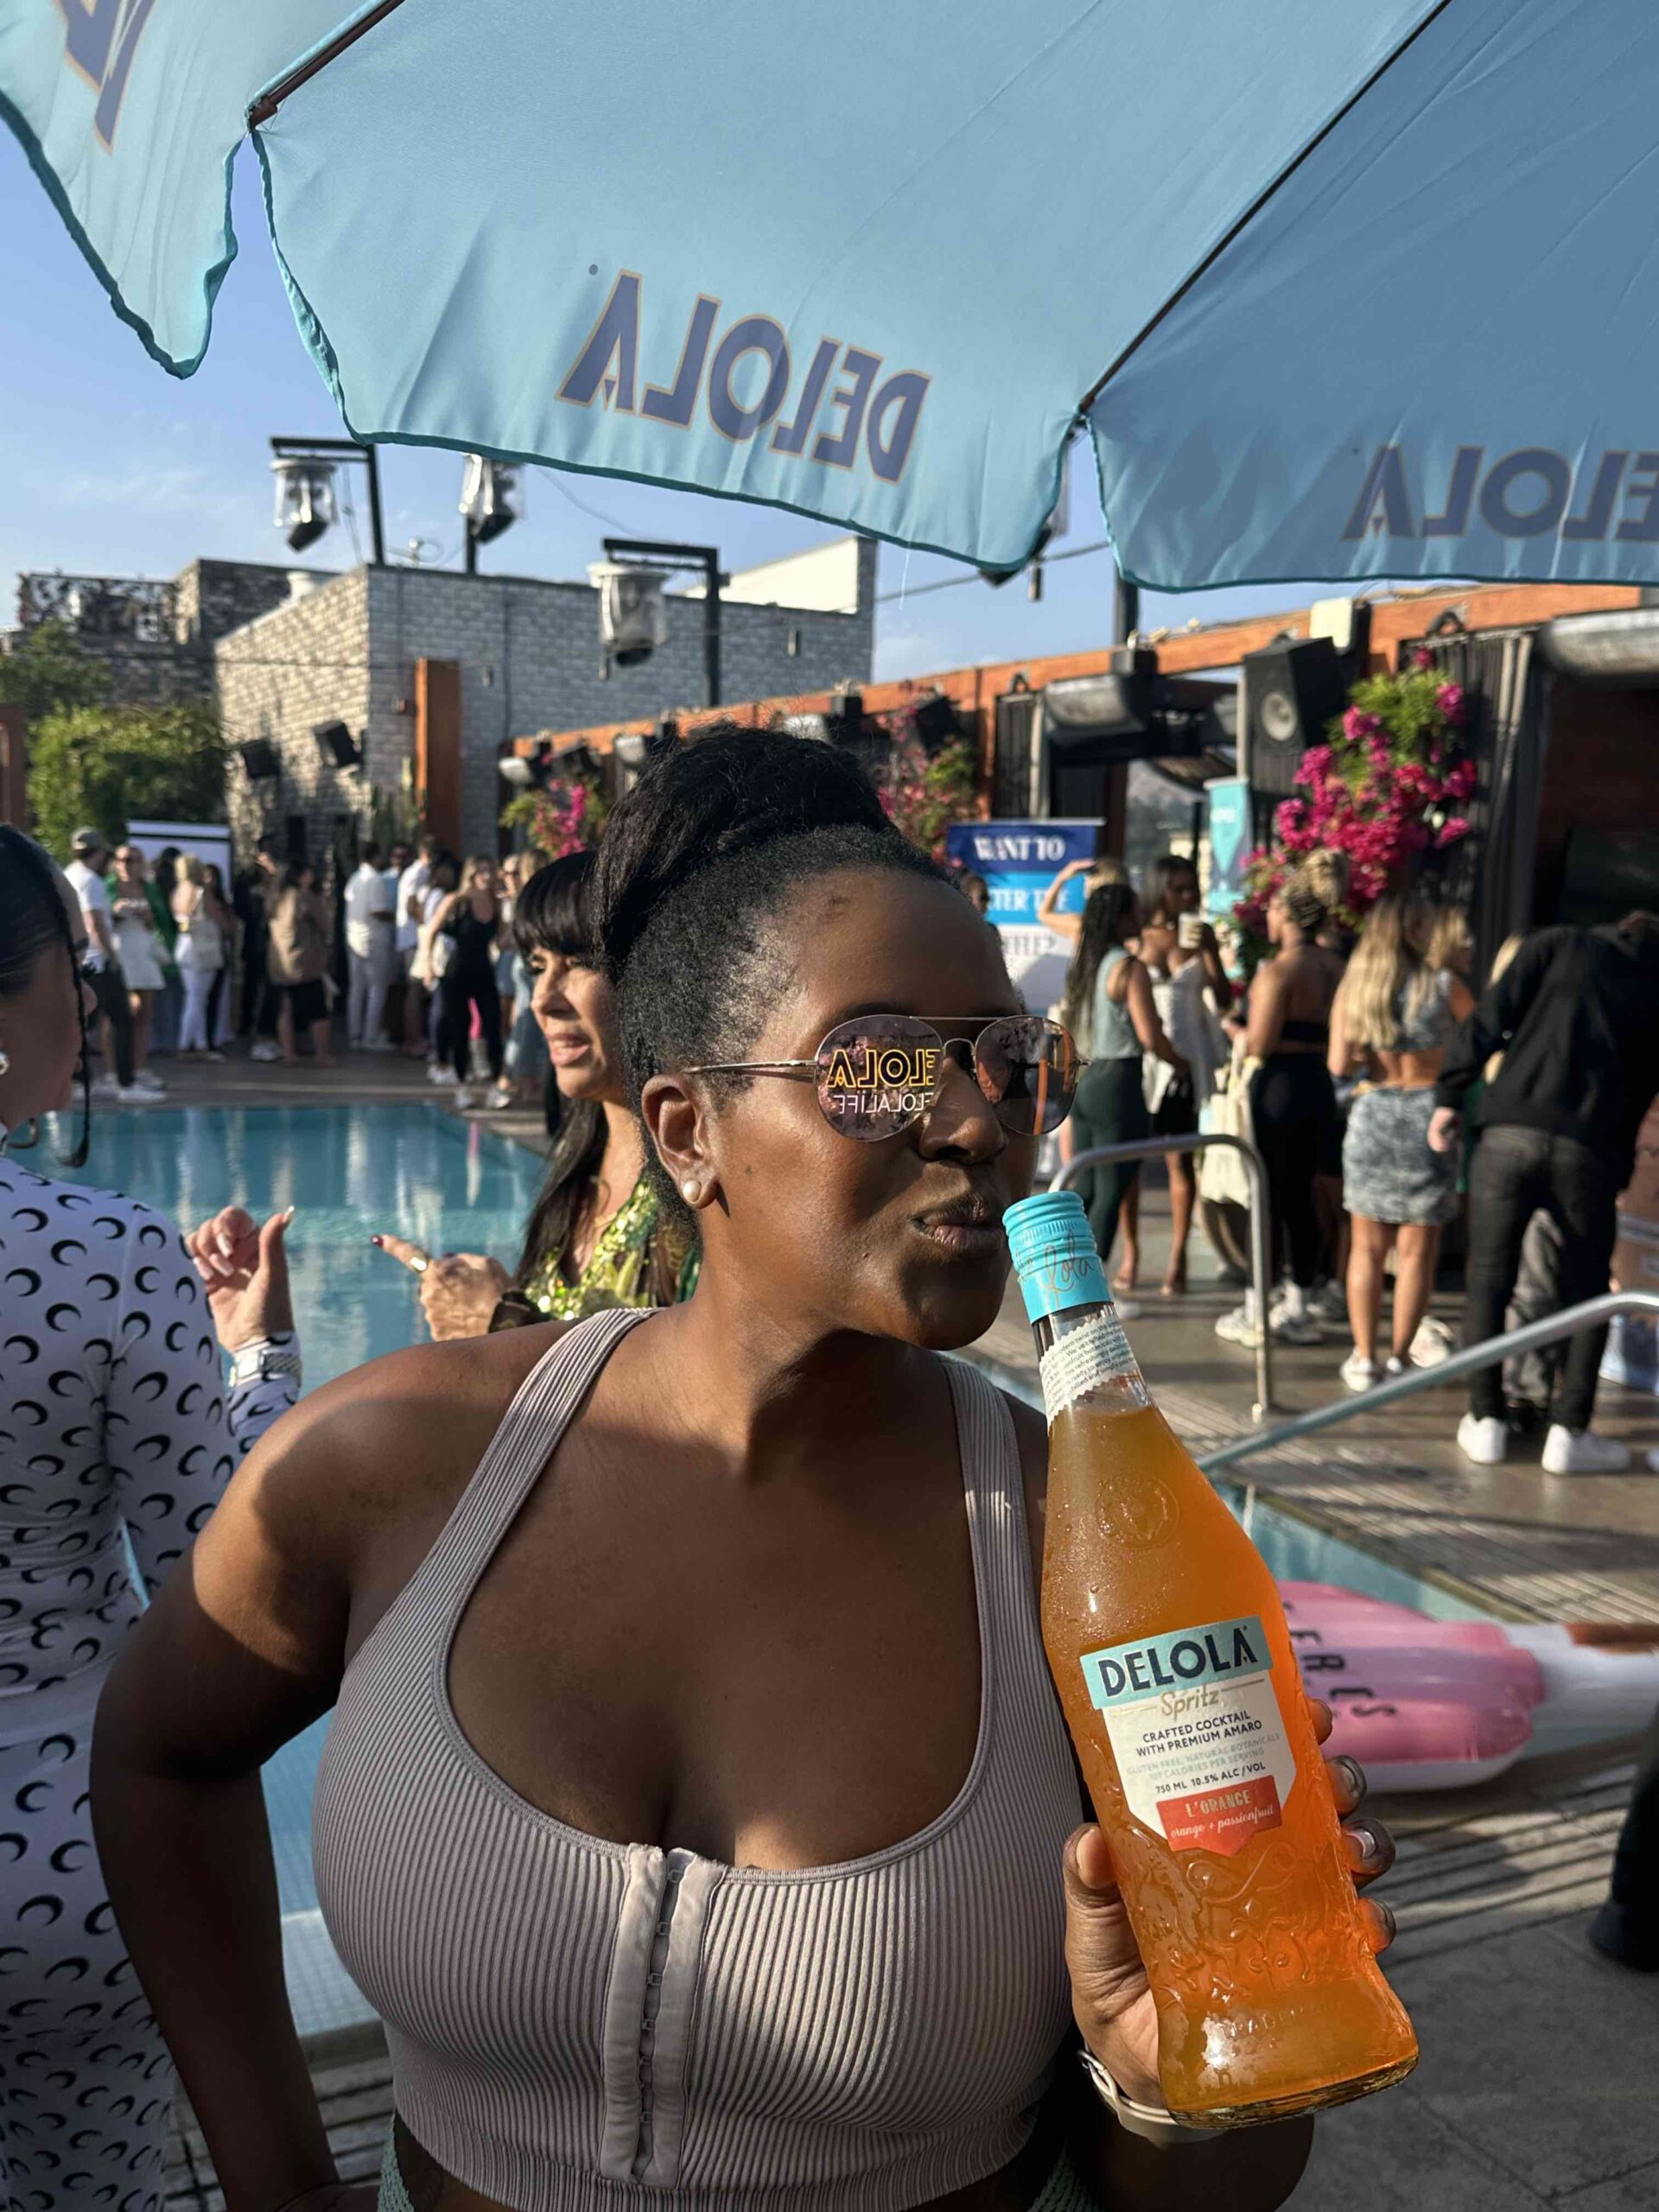 An image of lifestyle blogger Ariel holding a bottle of Jennifer Lopez's Delola low-calorie low-alcohol spritz line.